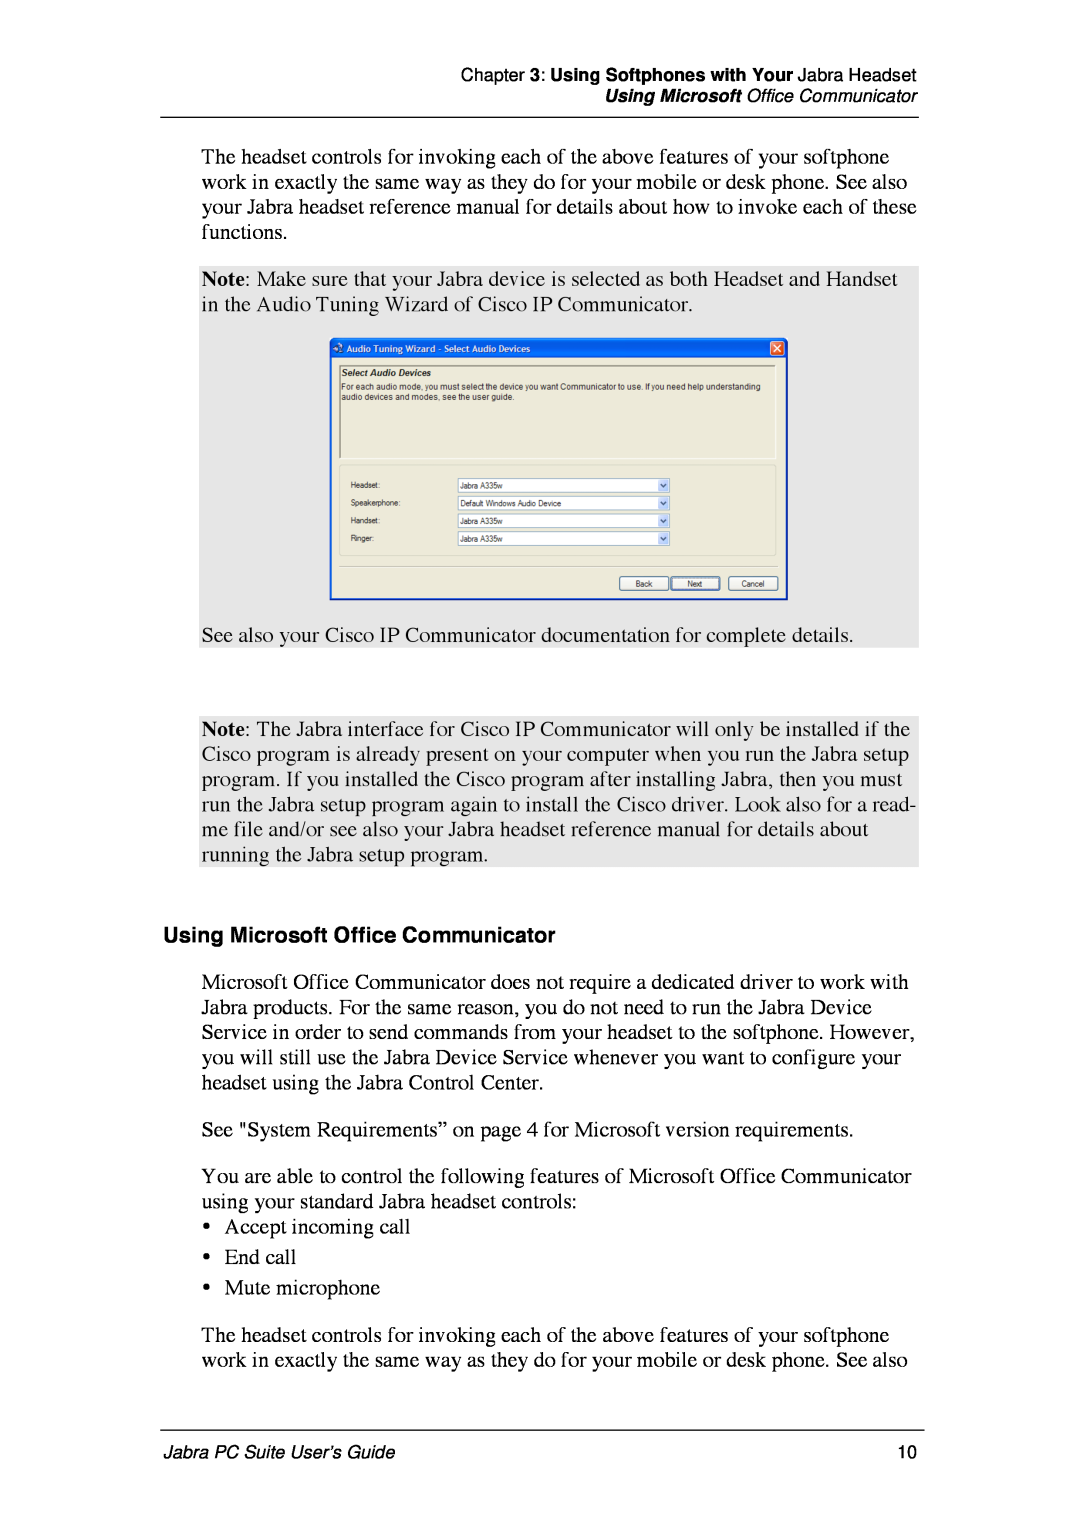 Jabra PC Suite manual Using Microsoft Office Communicator 